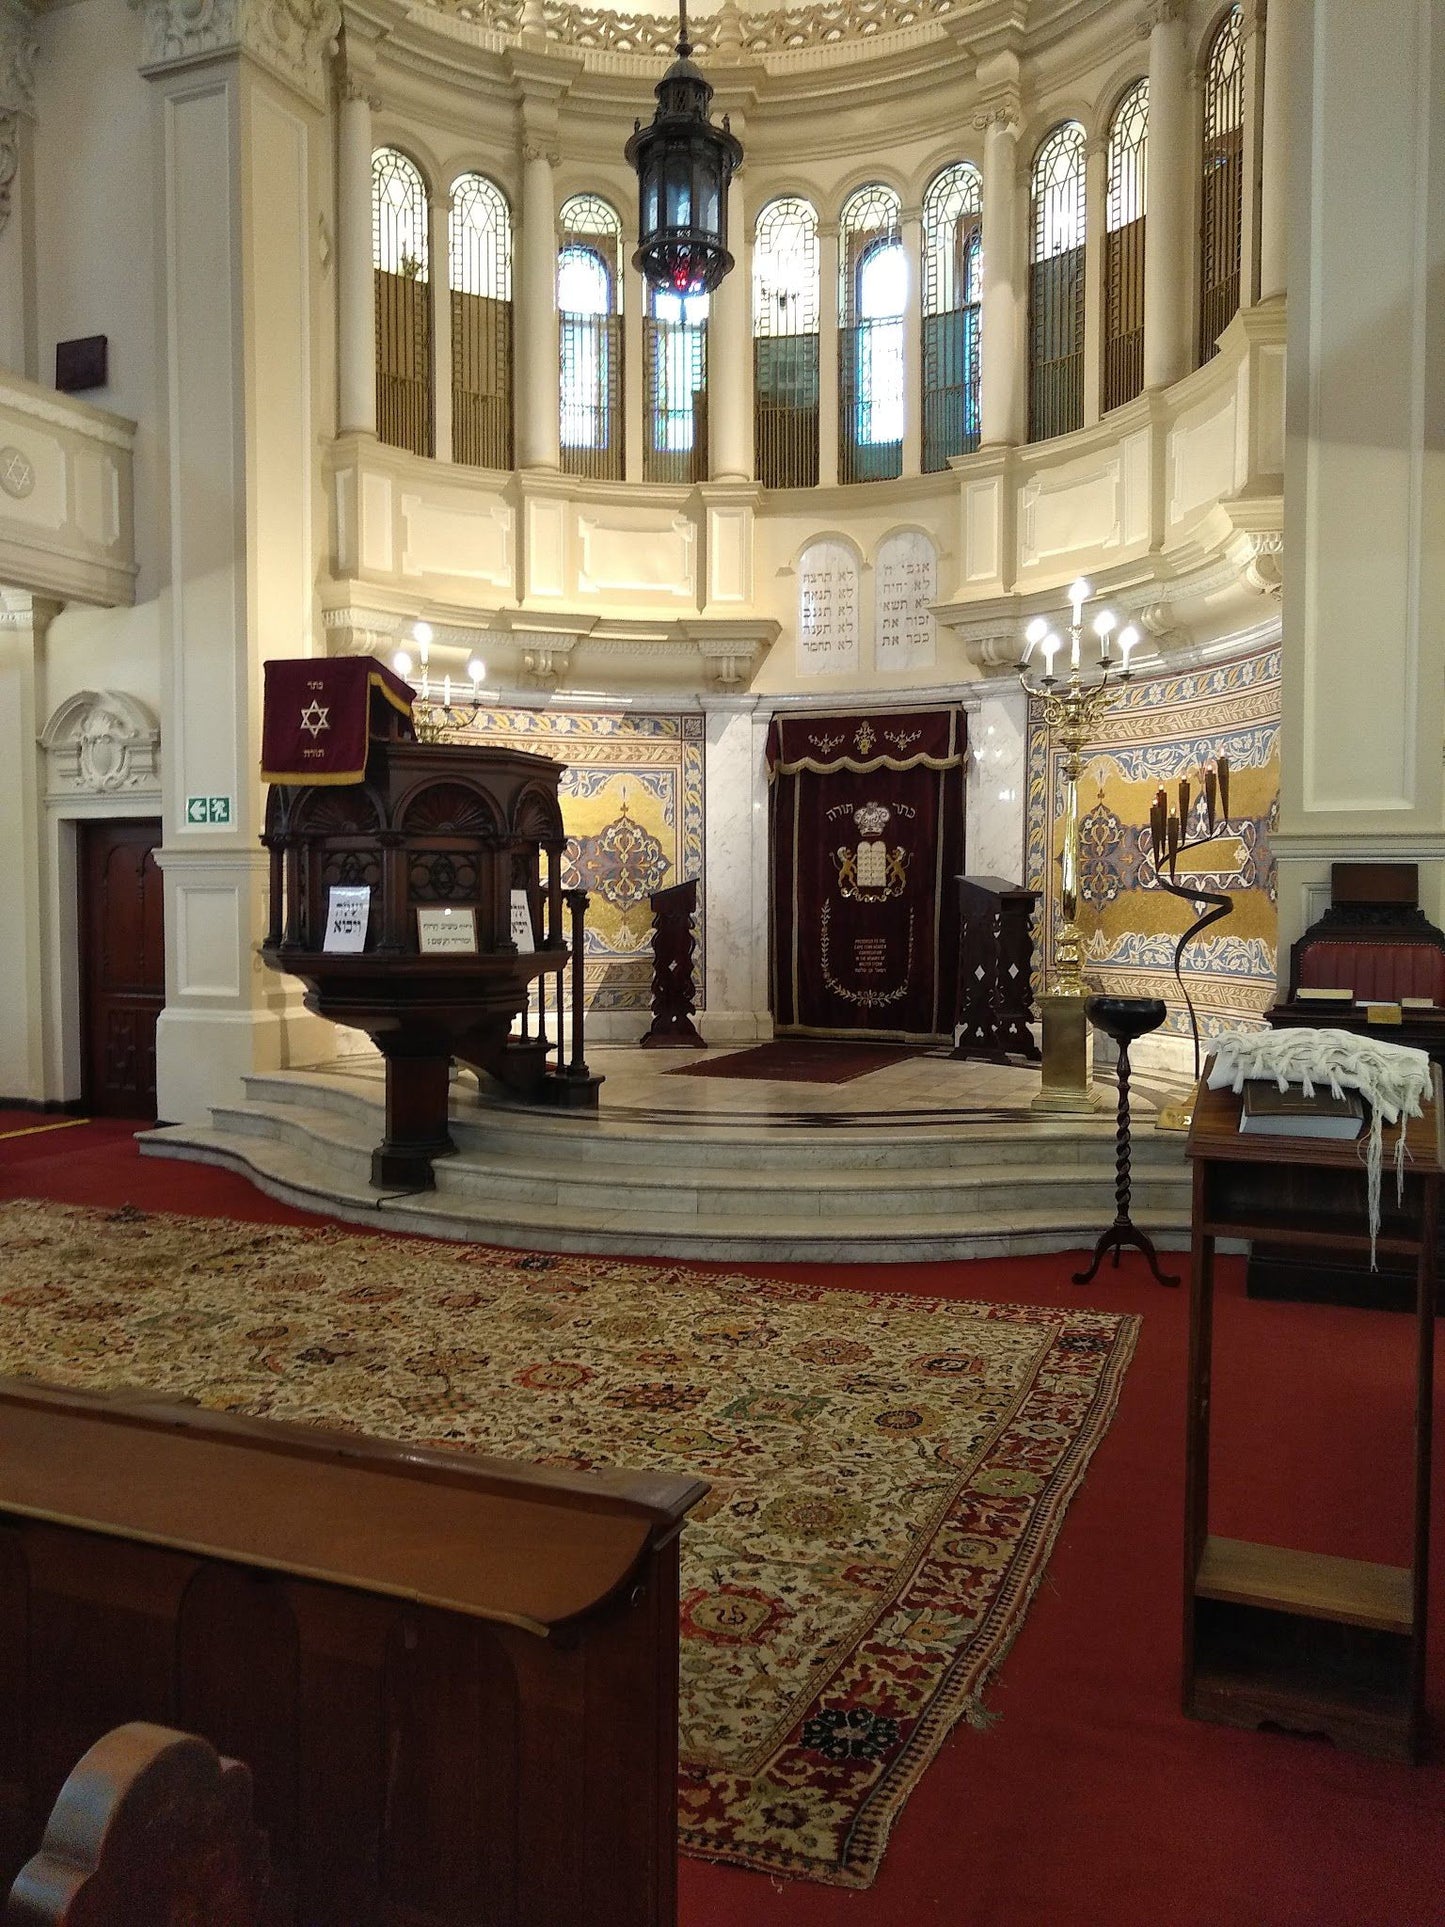  Cape Town Hebrew Congregation